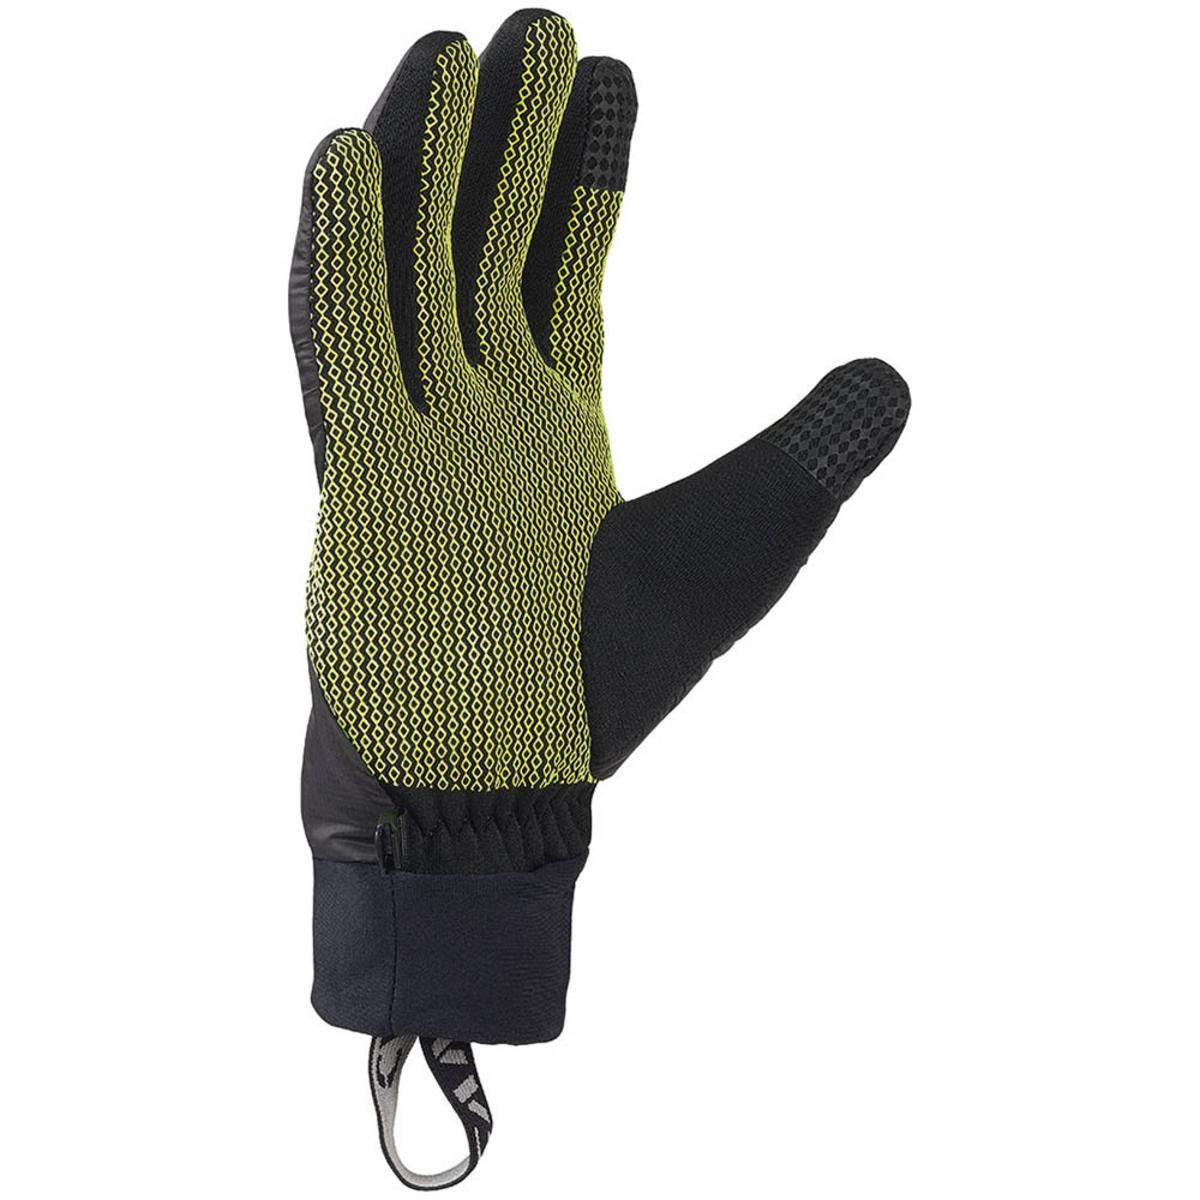 Camp G Air Winter Gloves